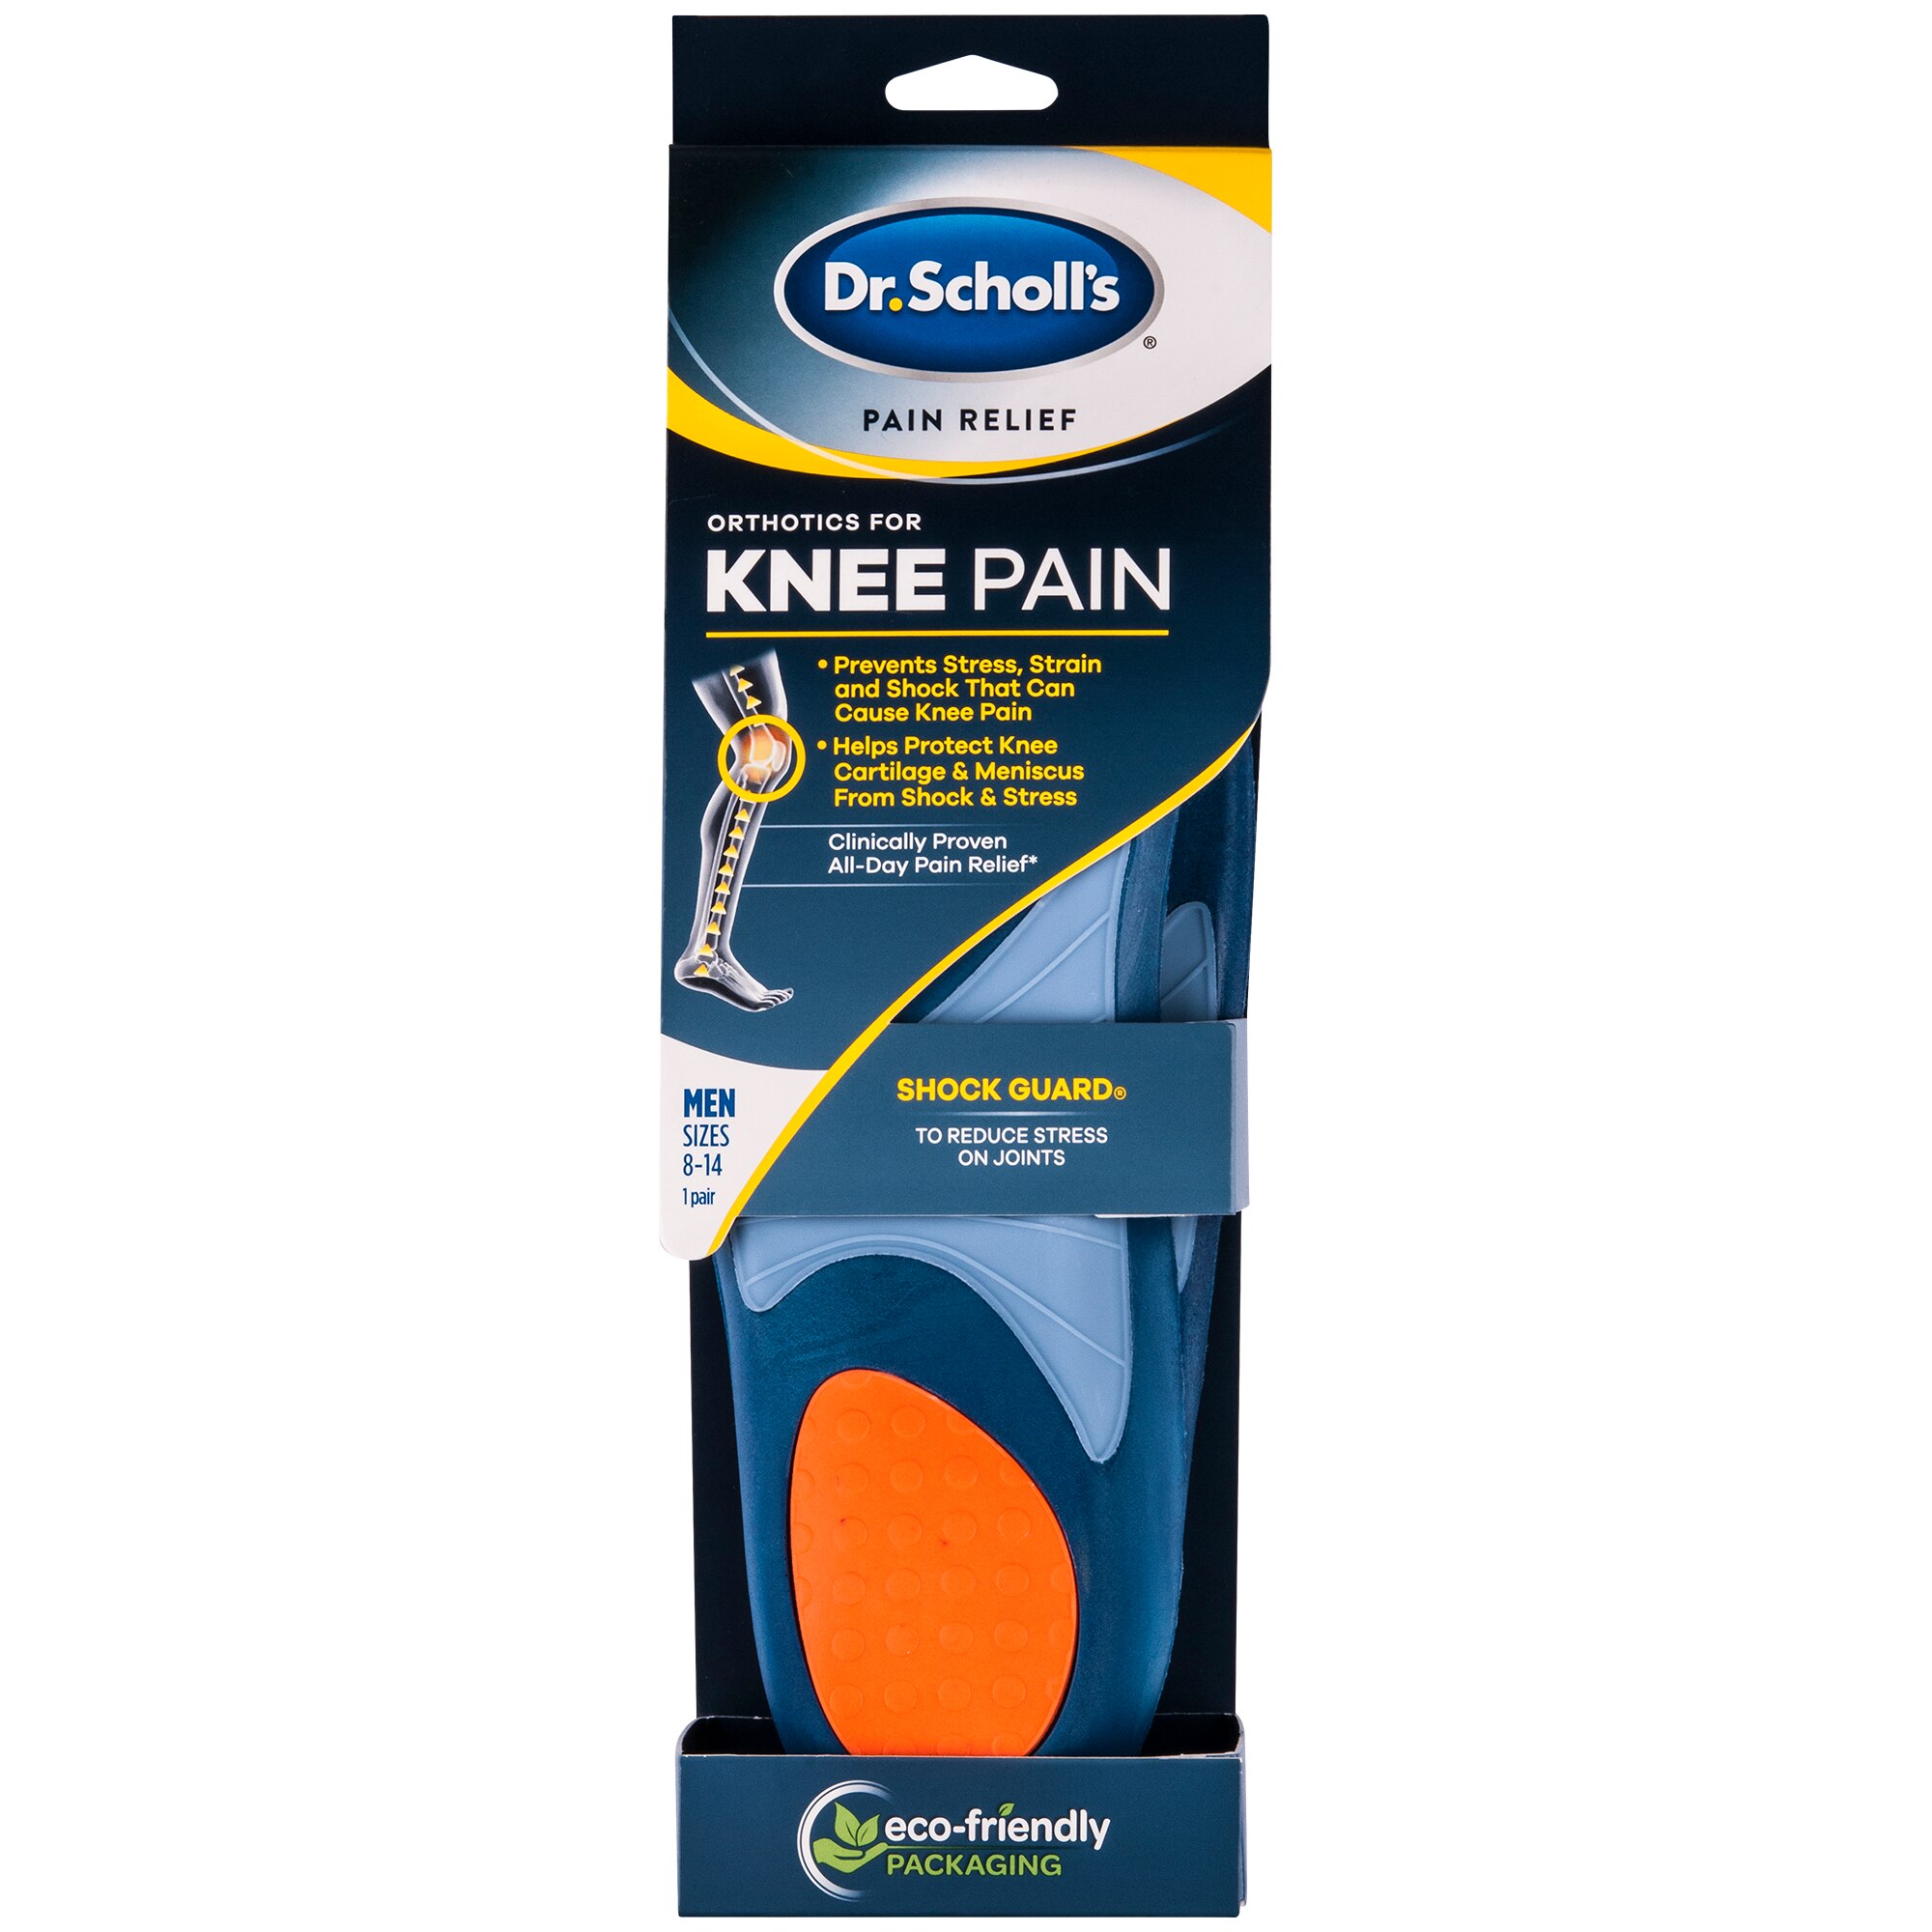 Dr. Scholl's KNEE Pain Relief Orthotics, 1 Pair (Men's 8-14)